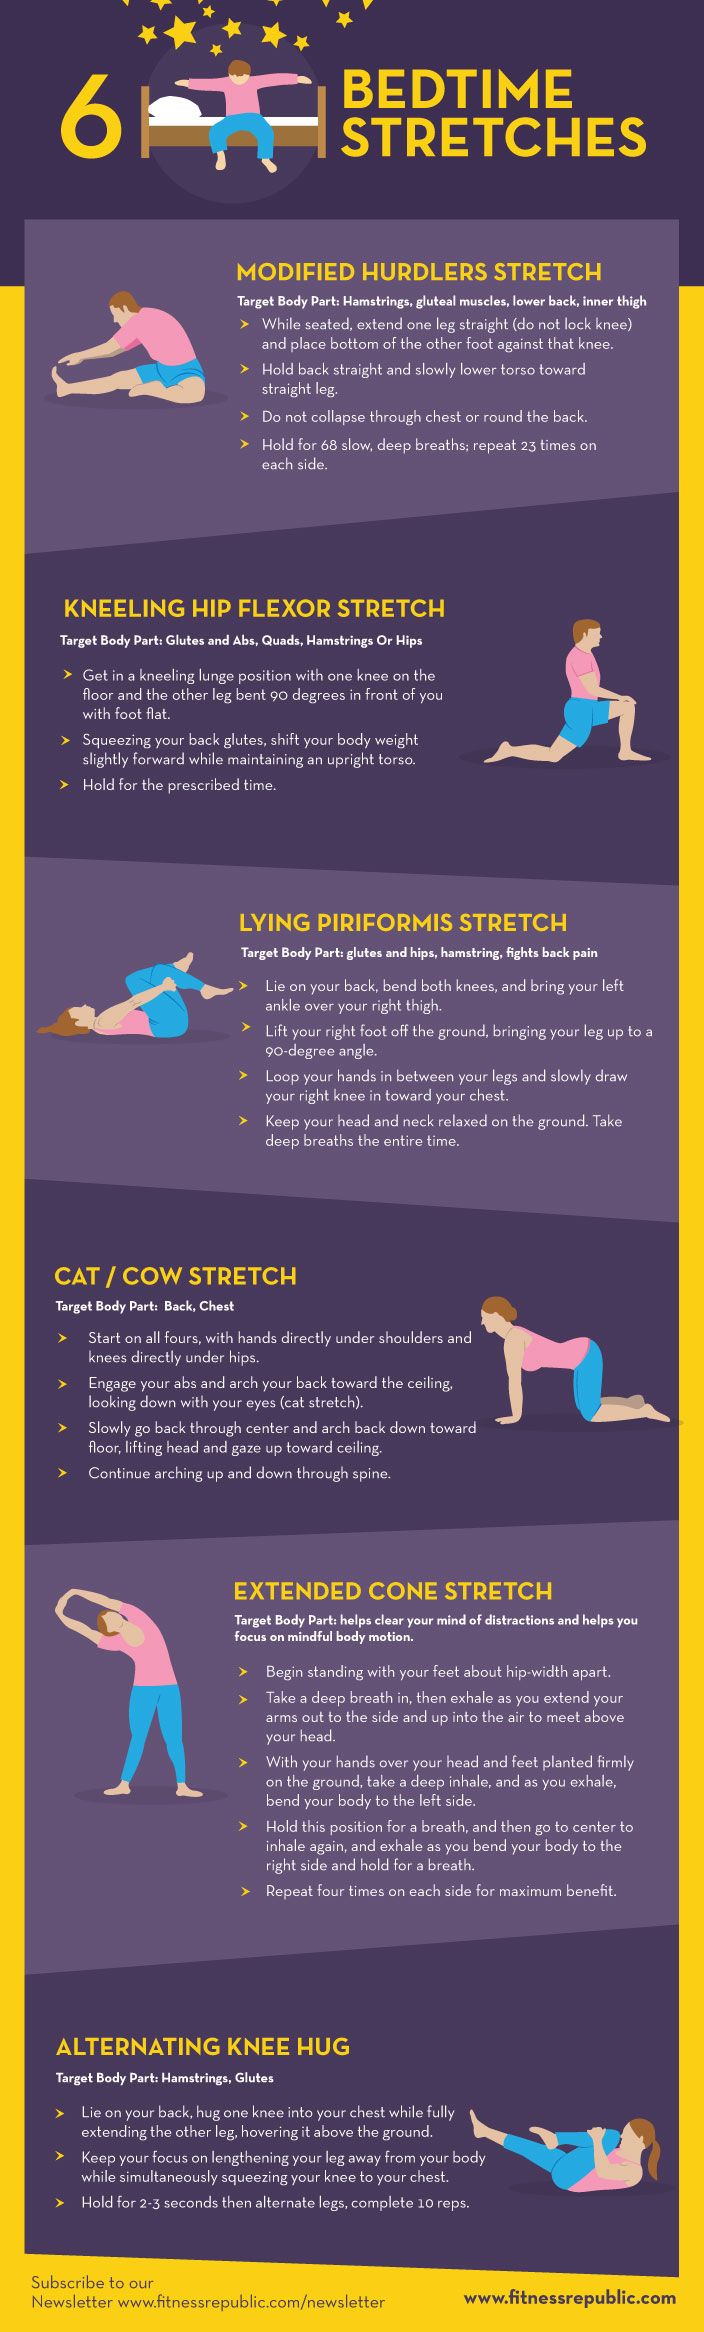 Full Body Stretch While Sleeping